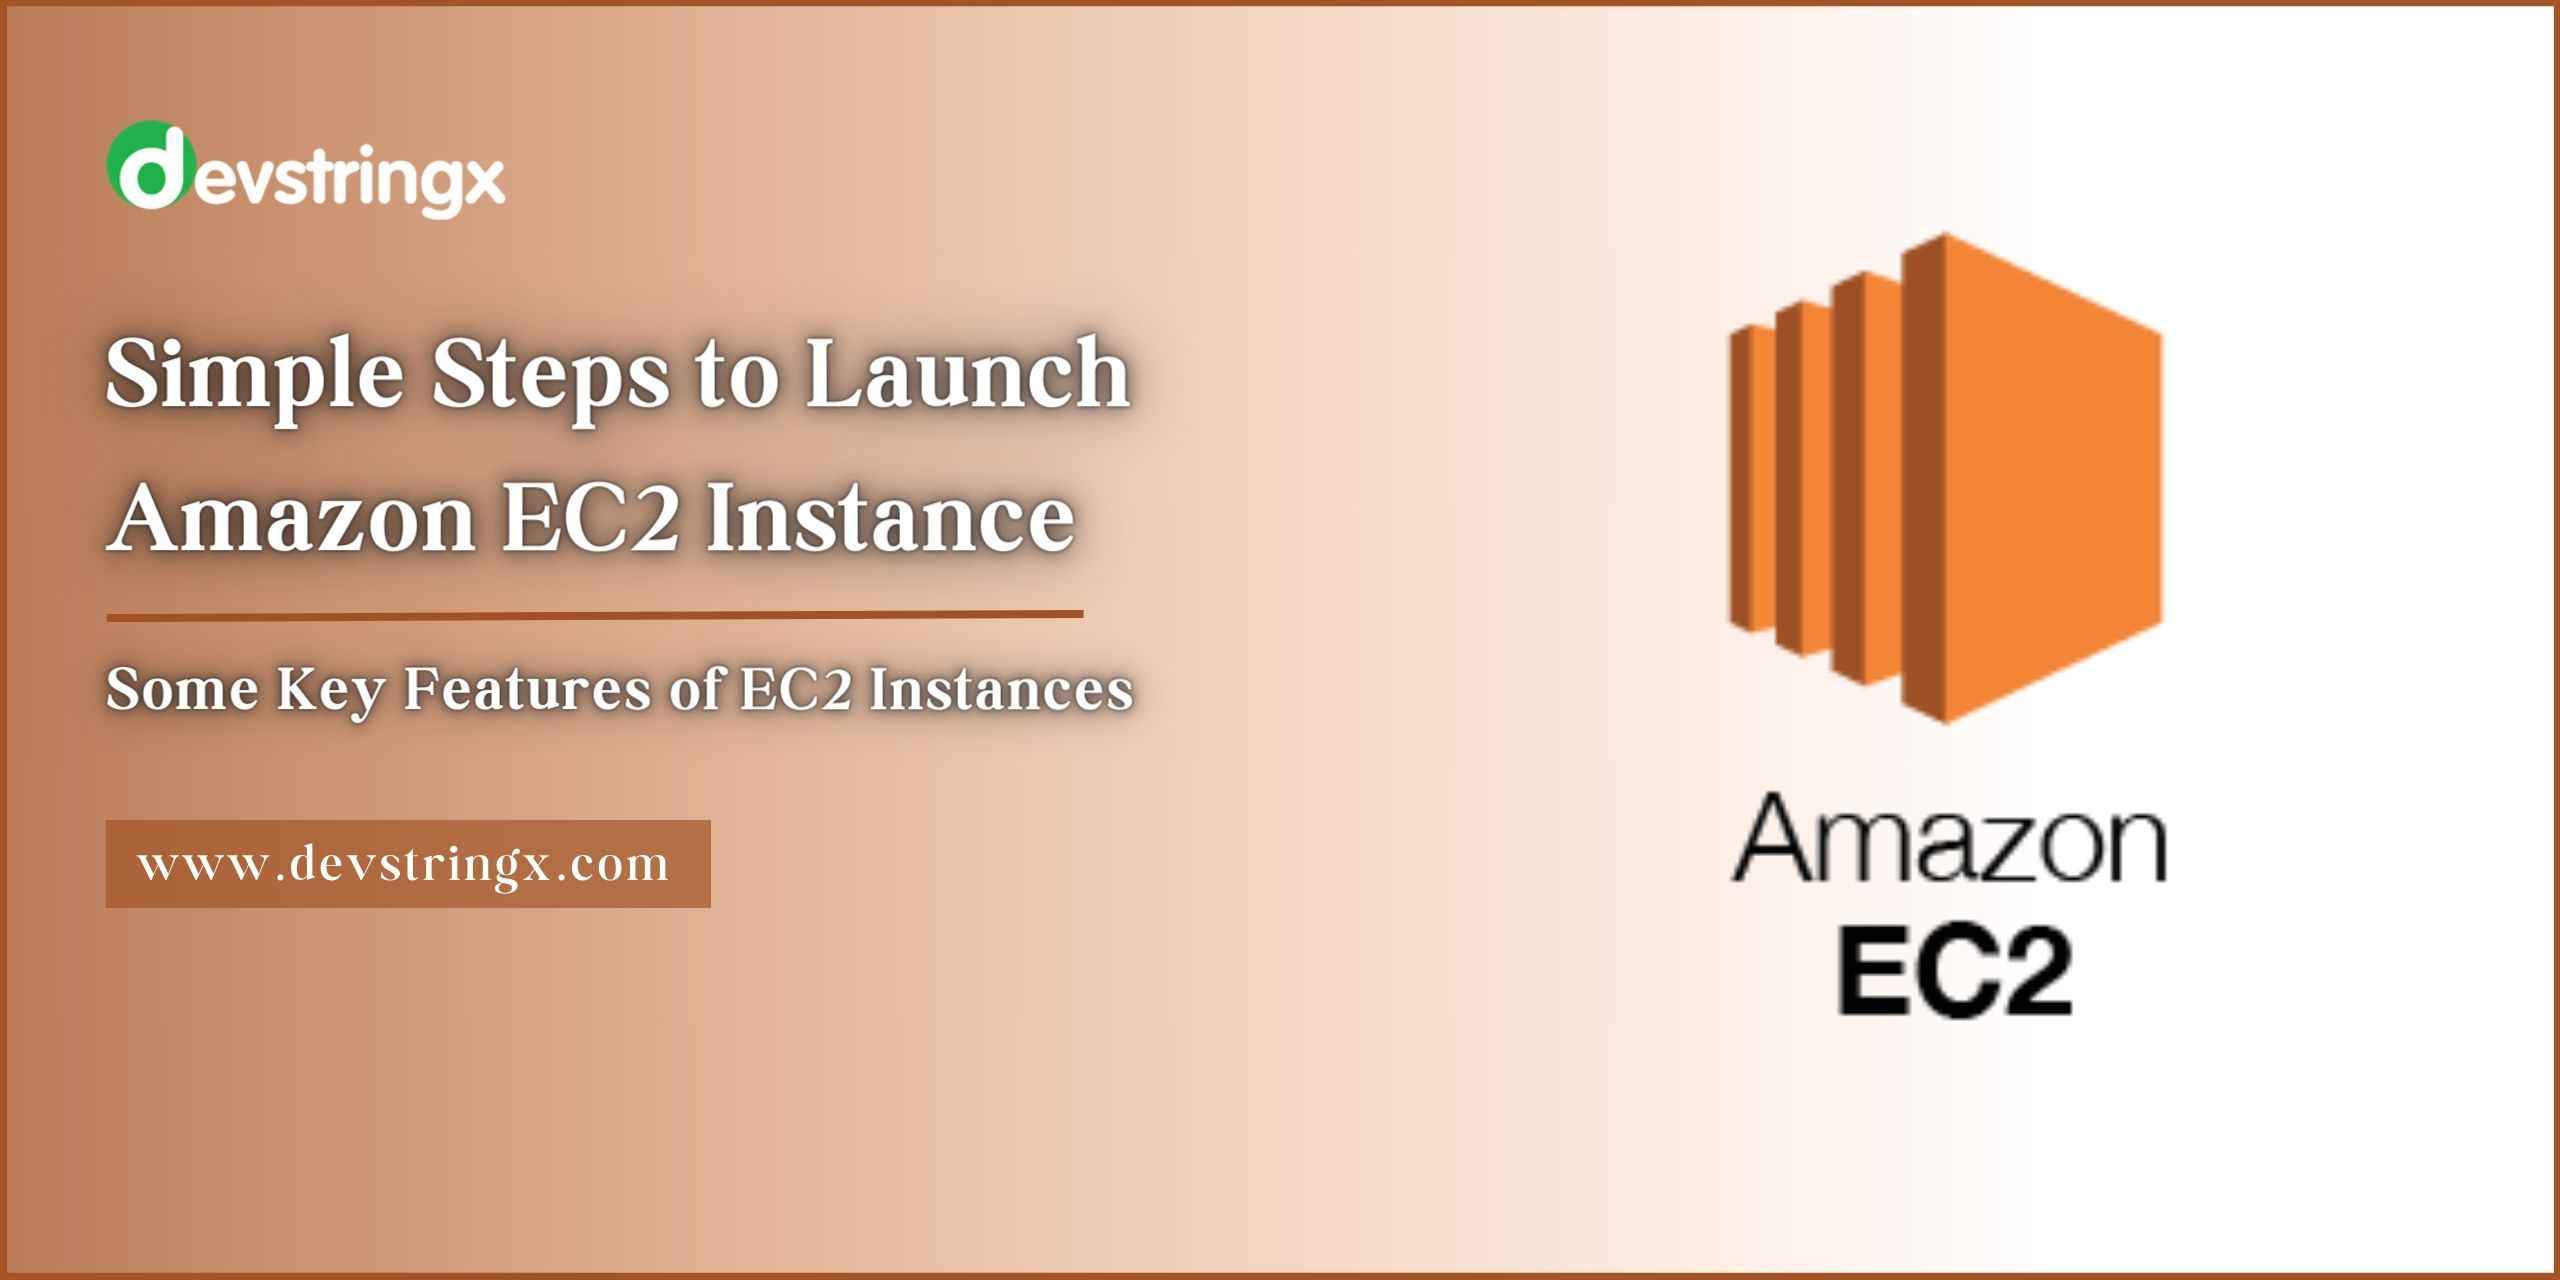 Feature image to launch EC2 Iinstance